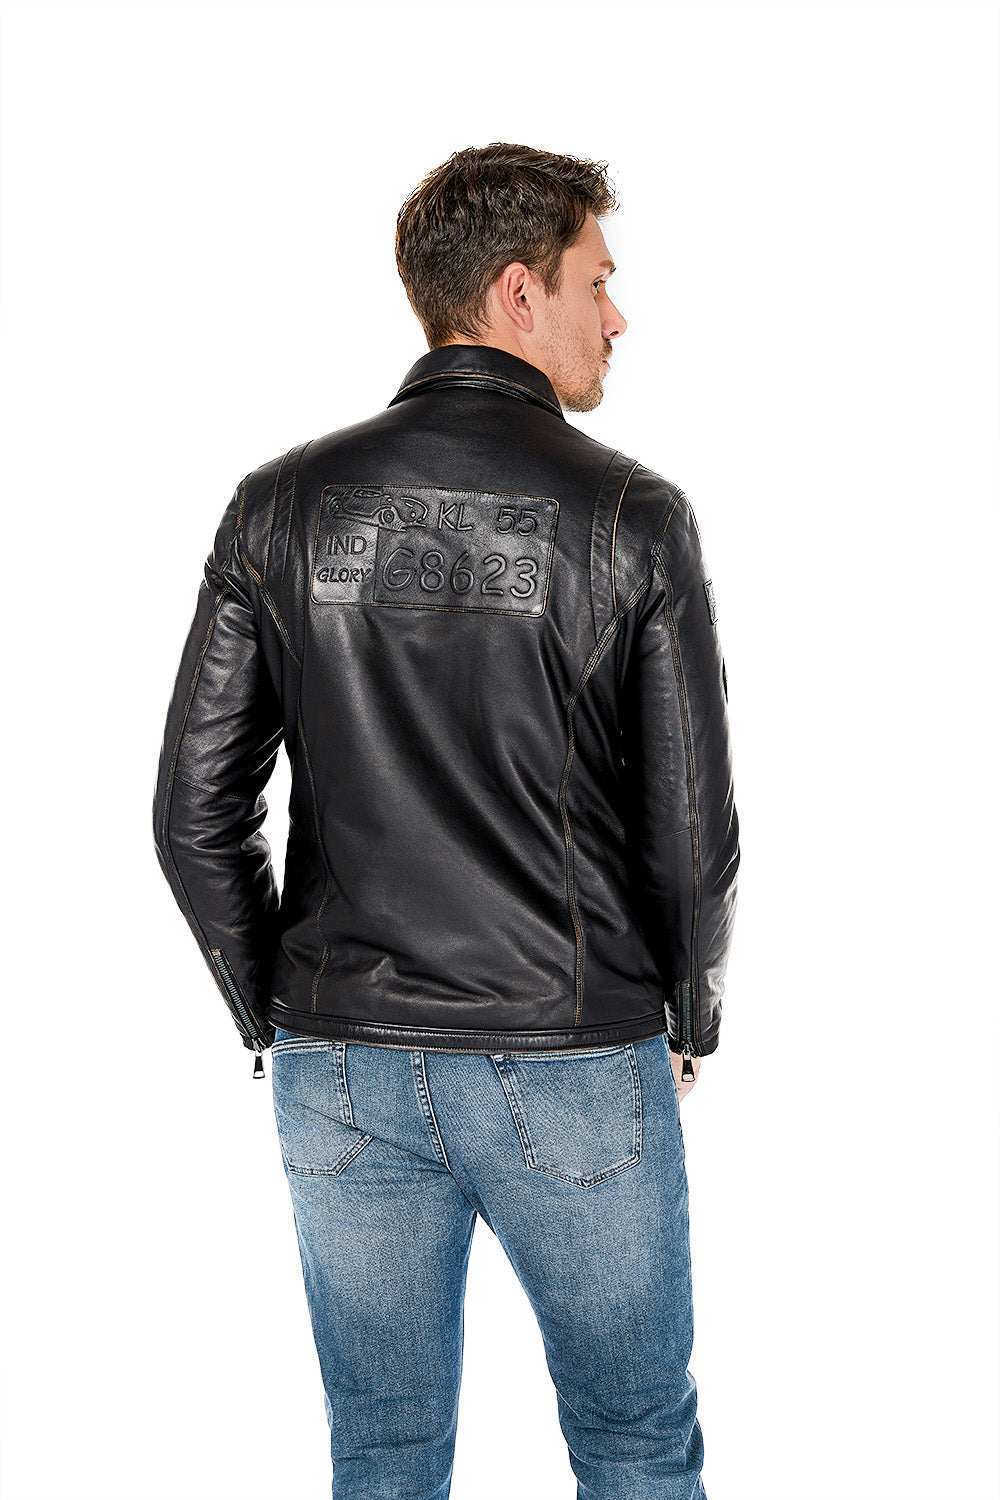 Eagle CM1 Men's Motorcycle Genuine Leather Jacket